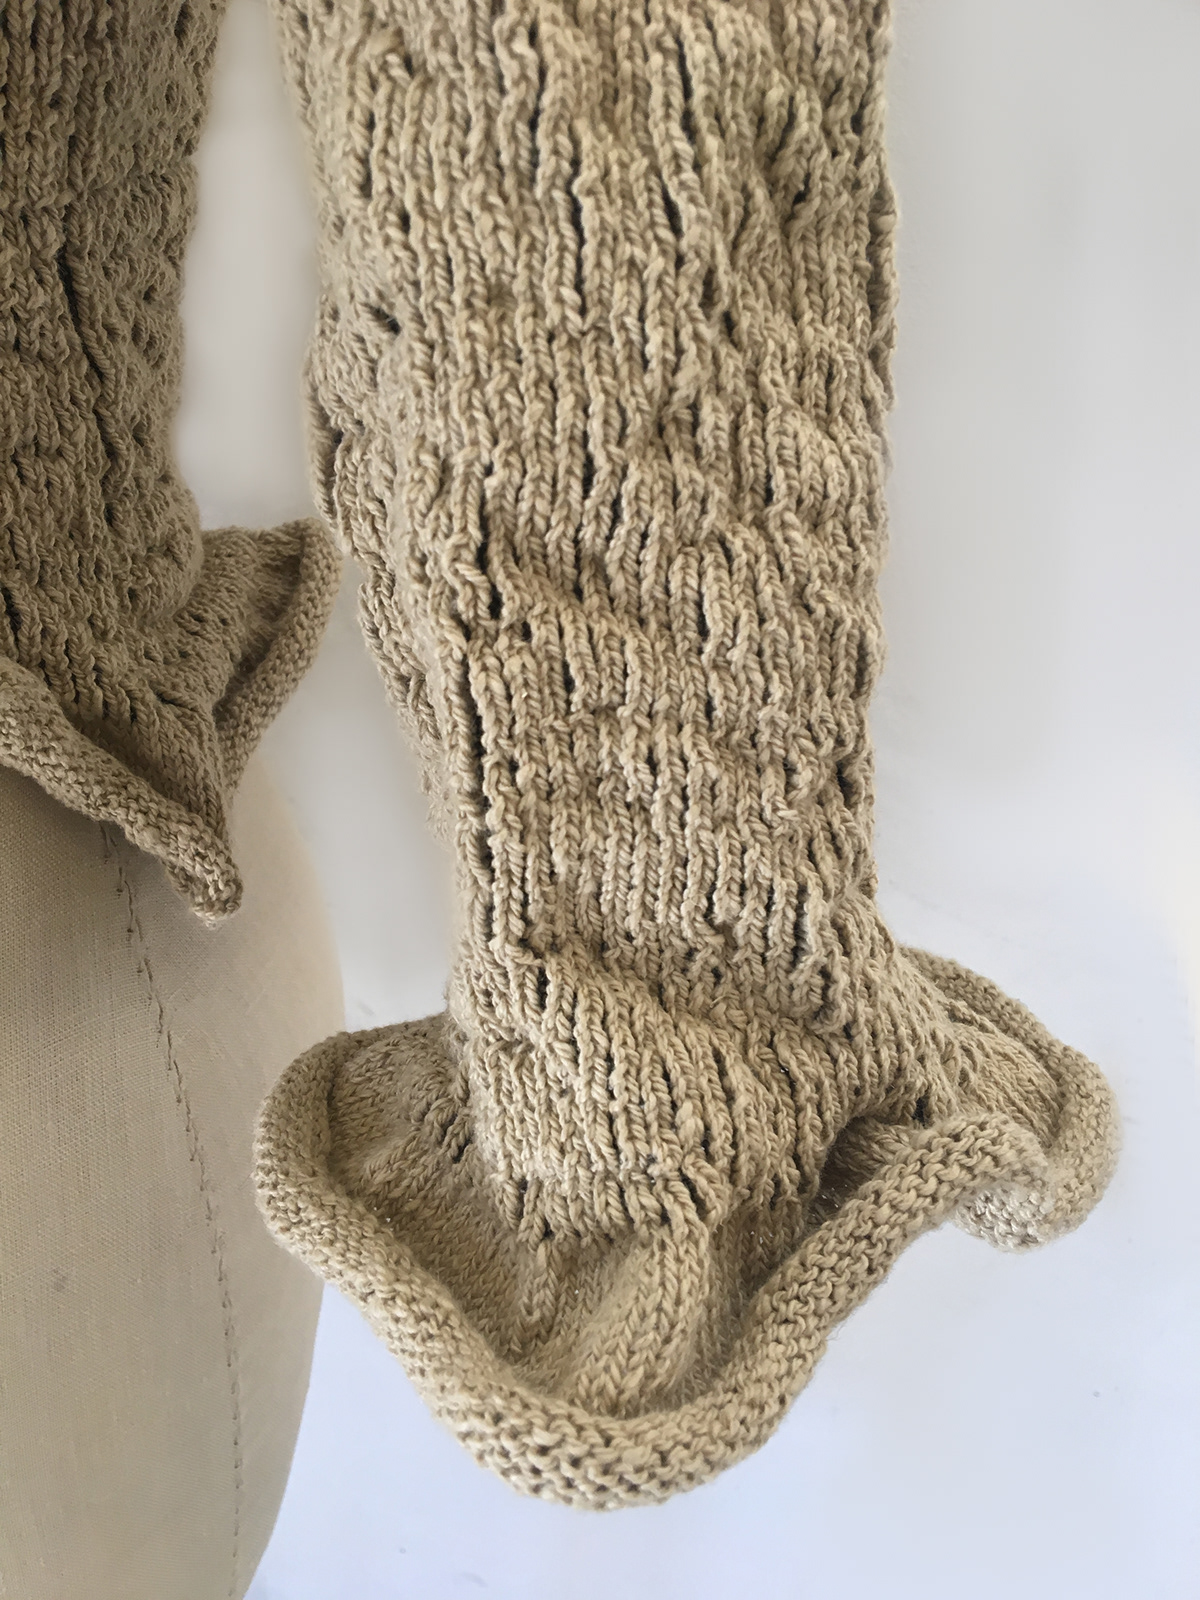 machine knit sweater Fungi textile